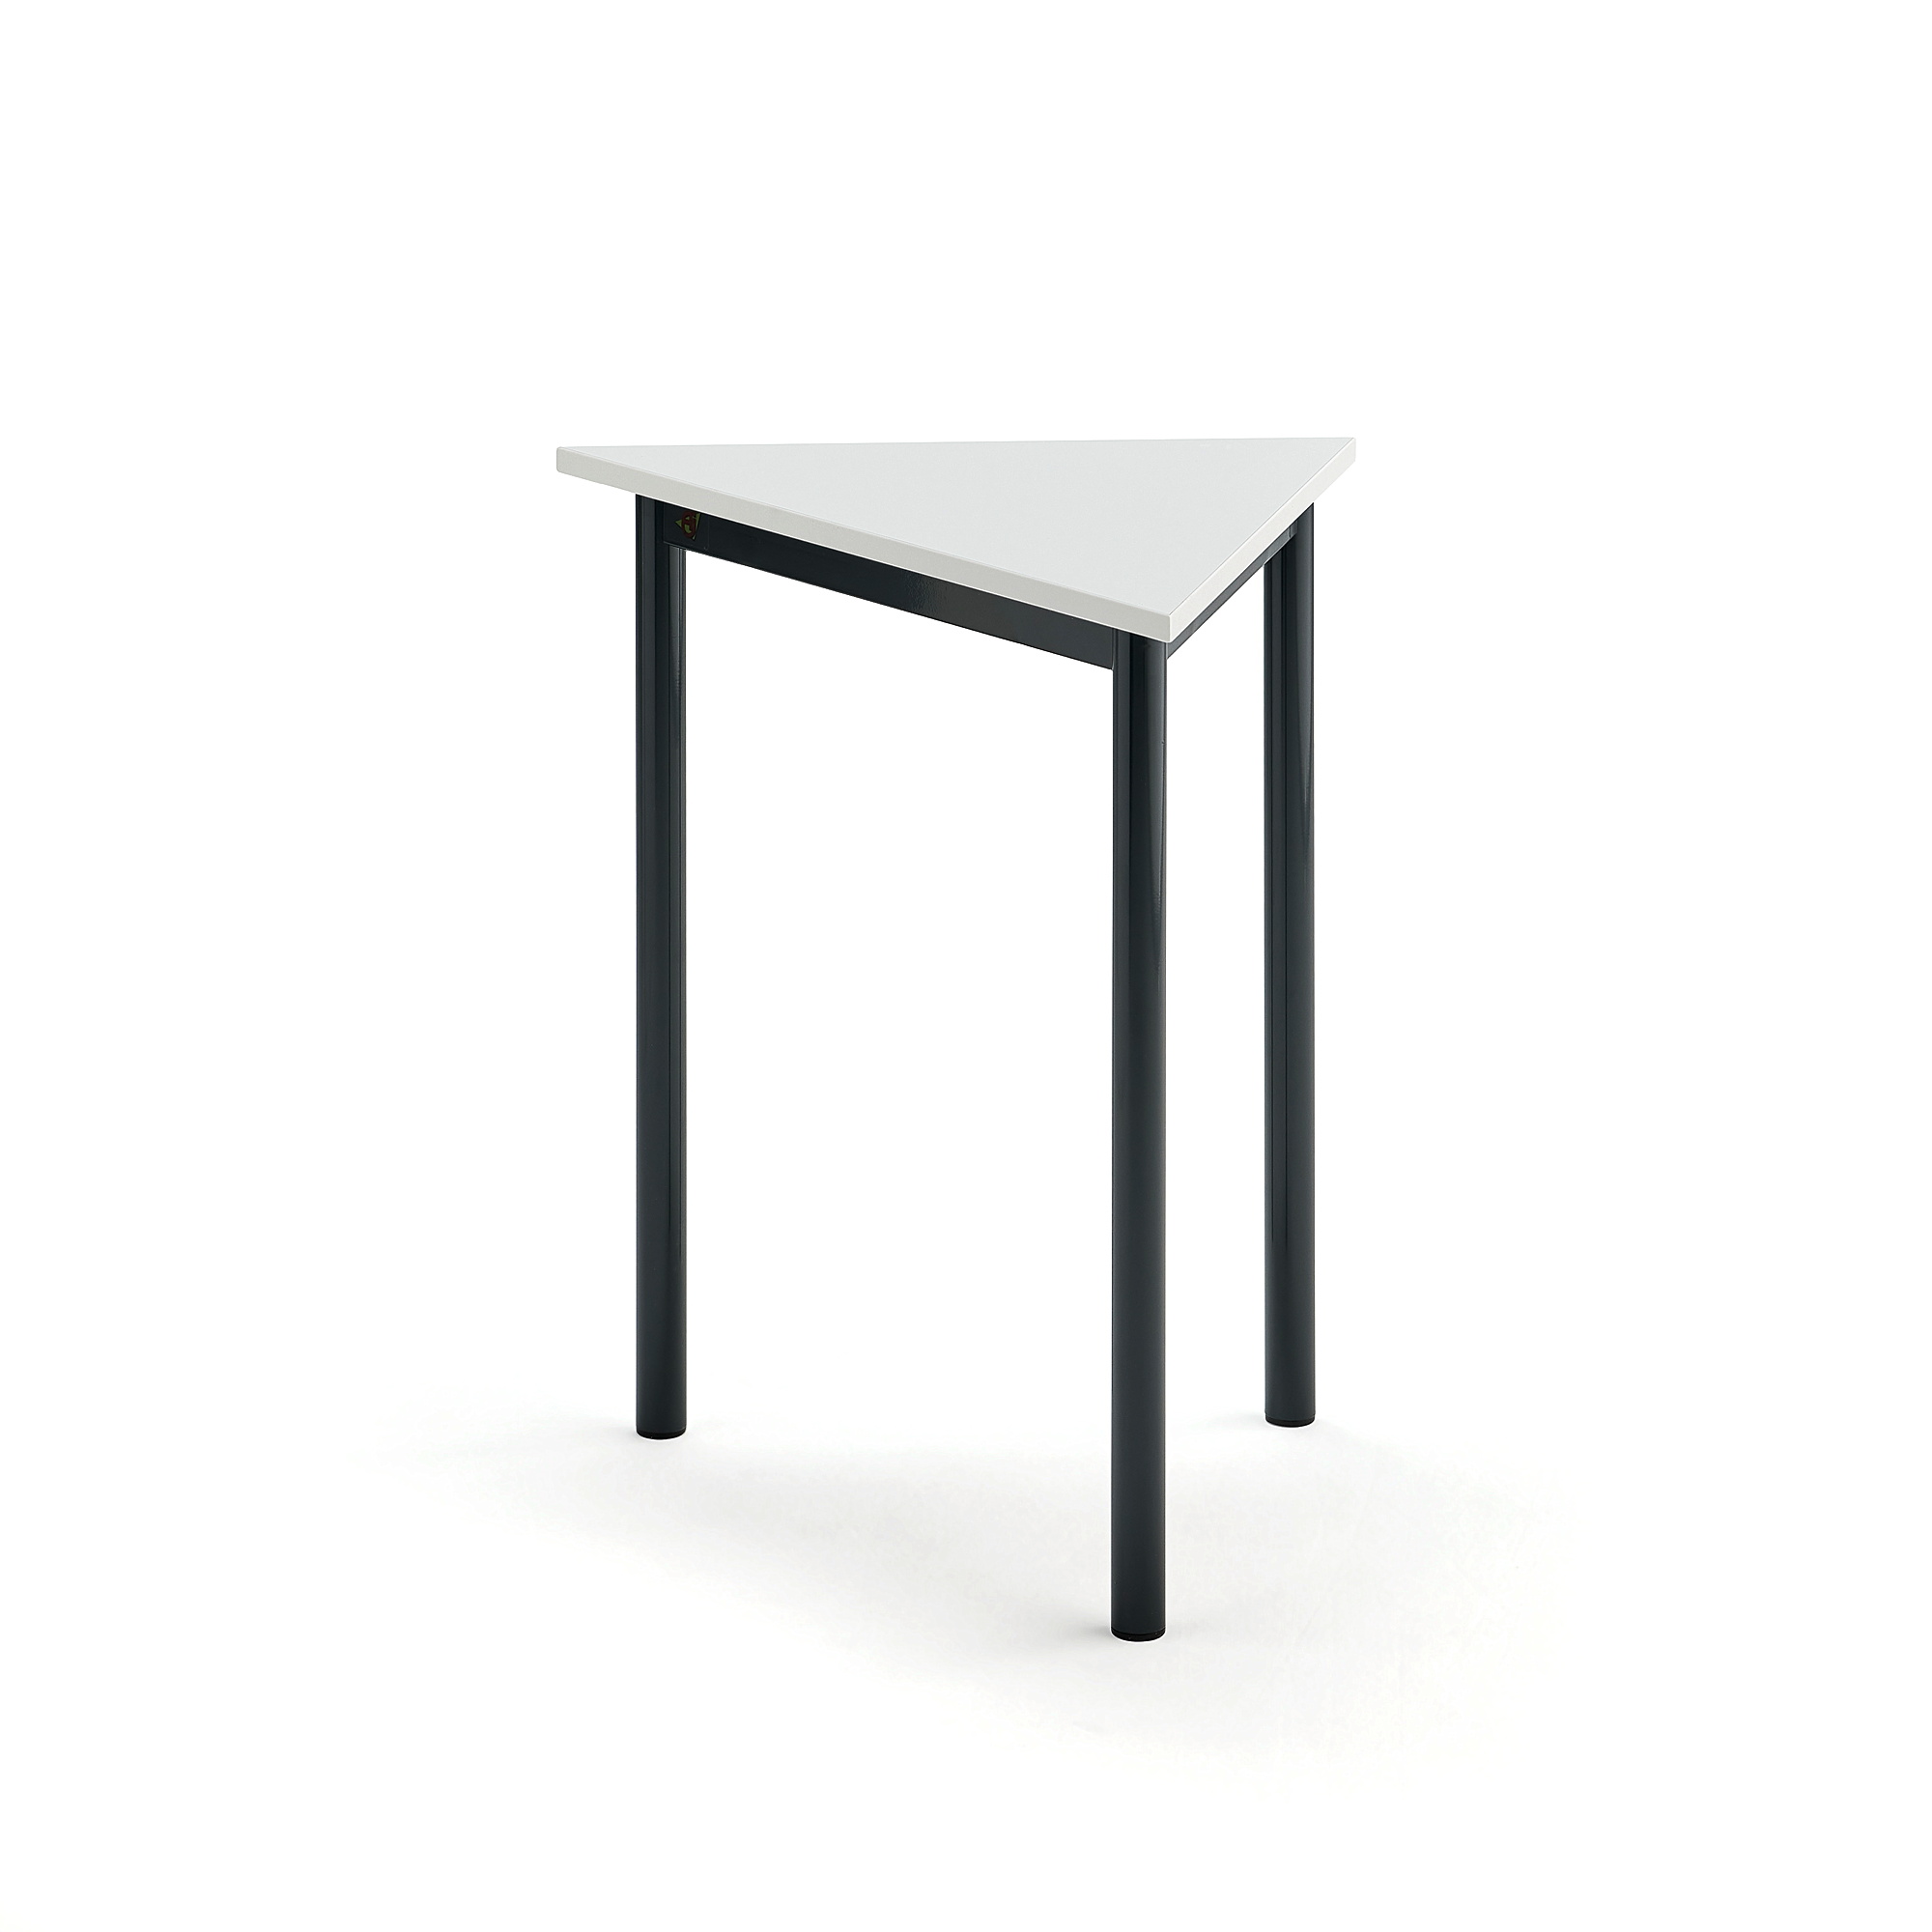 Stůl BORÅS TRIANGEL, 700x600x720 mm, antracitově šedé nohy, högtryckslamina, bílá